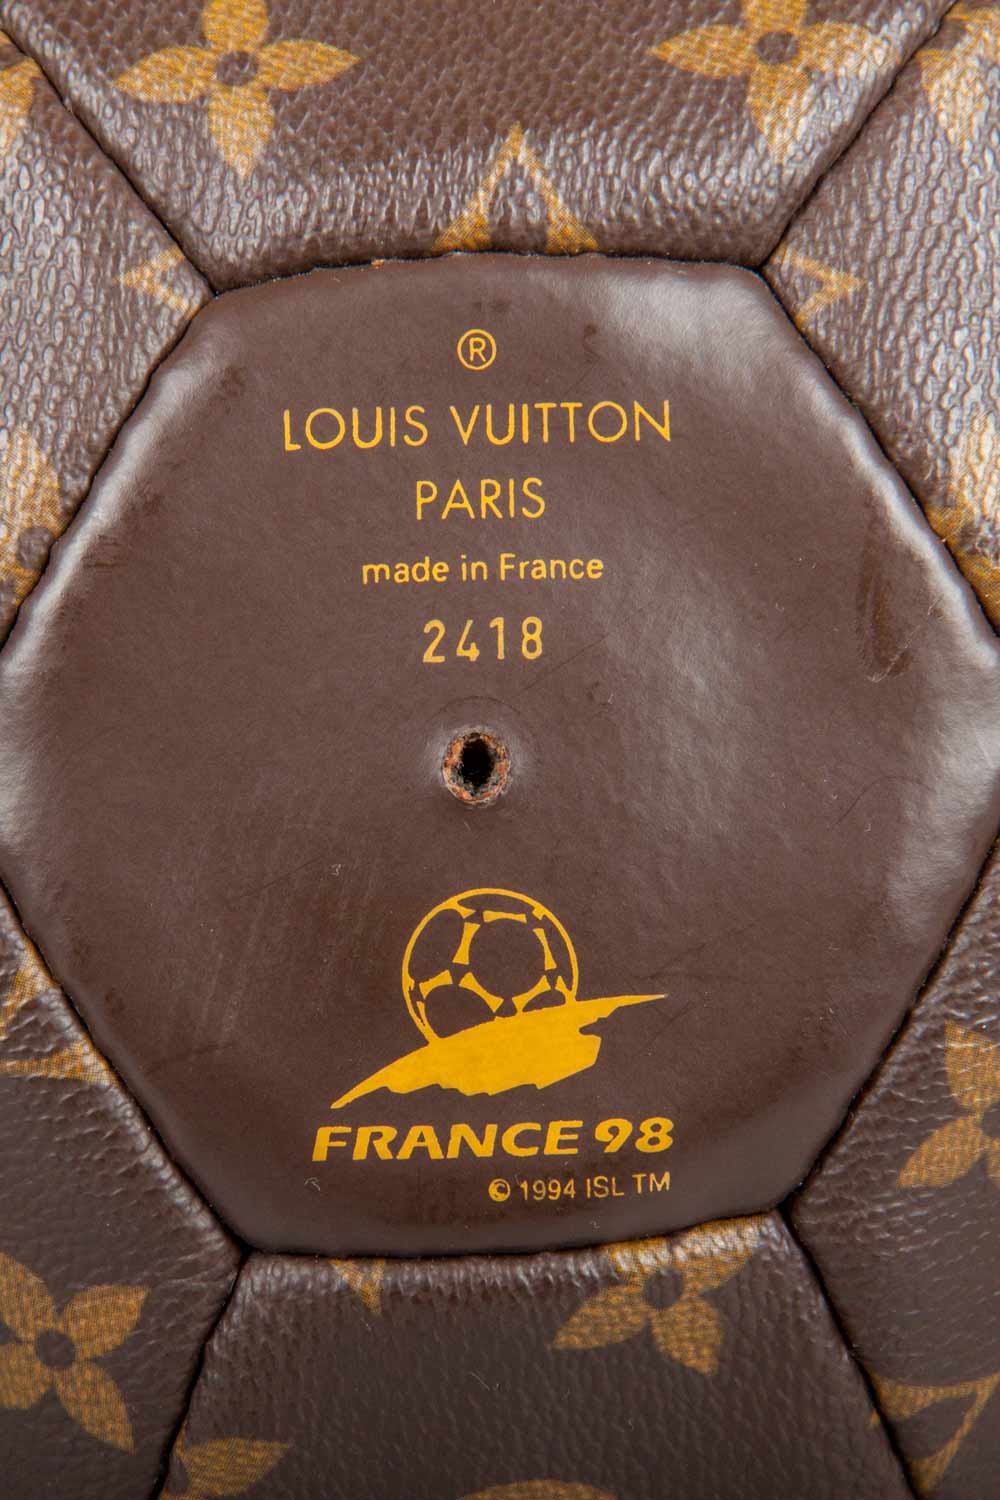 Tote - Vuitton - Louis Vuitton Soccer Ball World Cup 1998